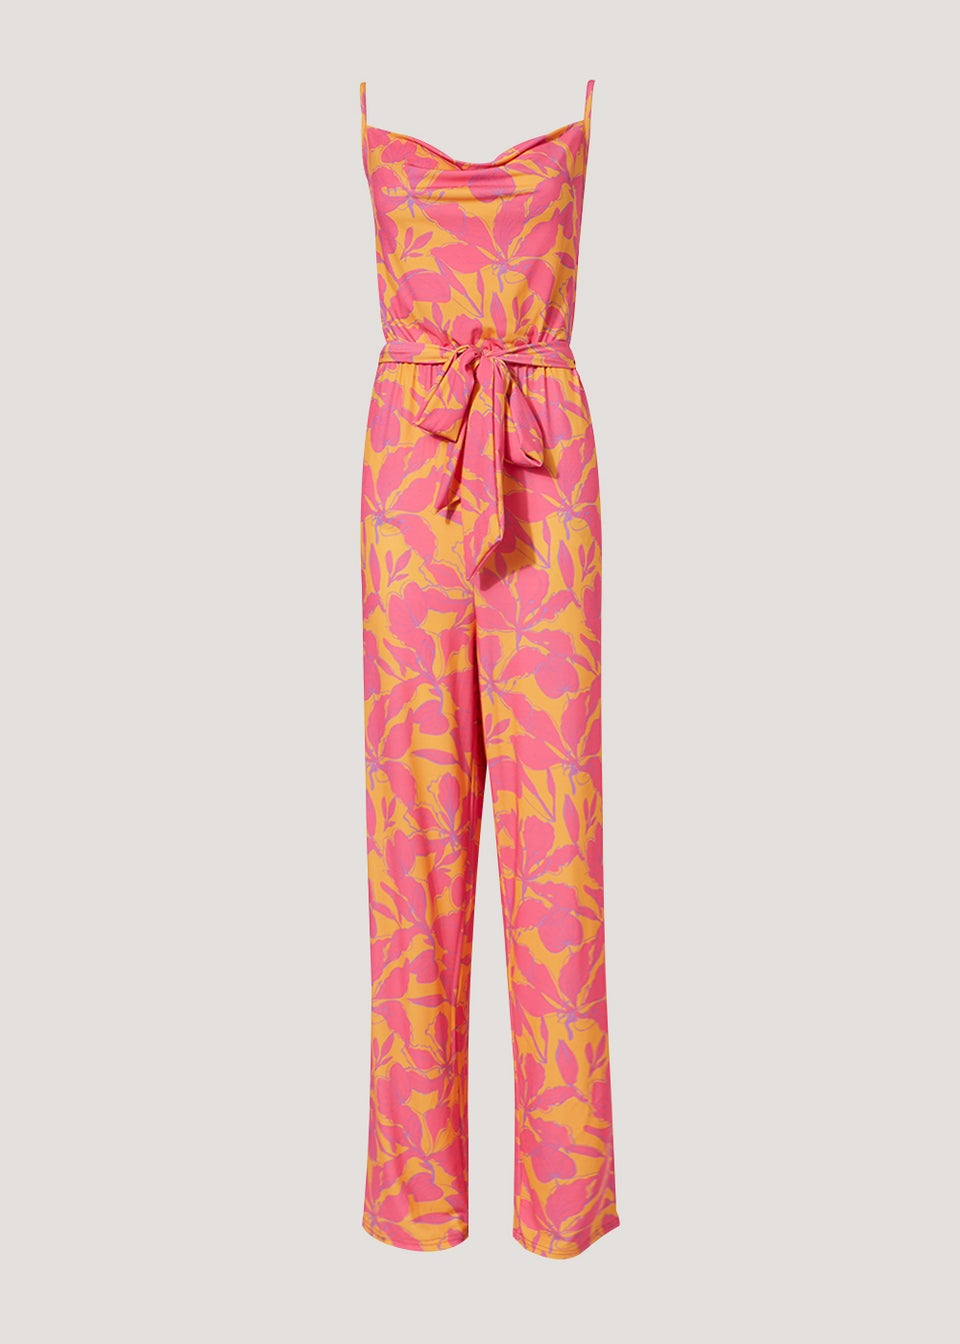 Be Beau Pink Floral Jumpsuit - Matalan